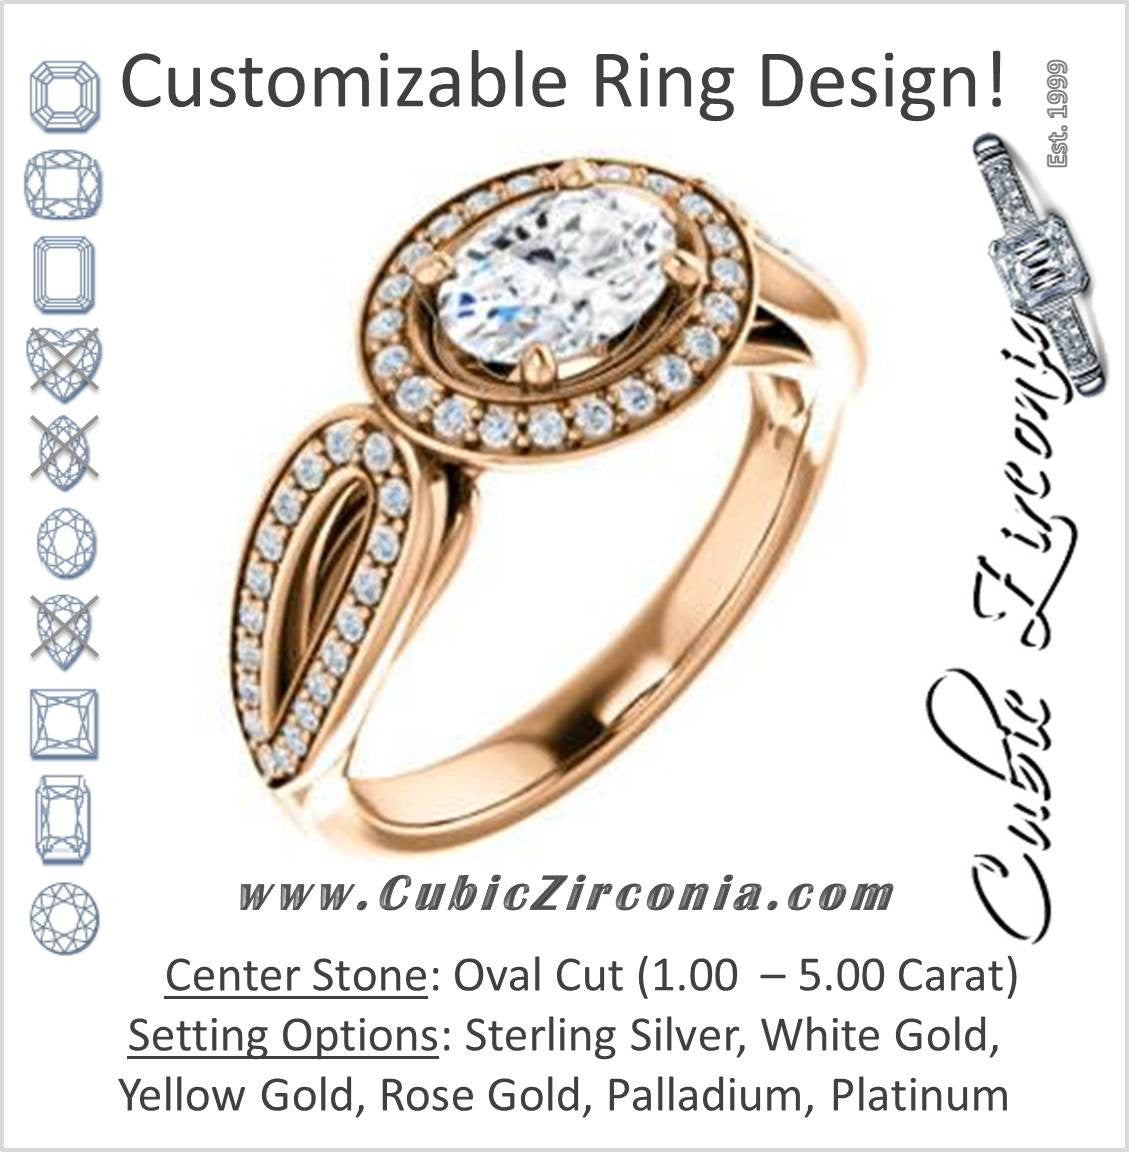 Cubic Zirconia Engagement Ring- The Jordyn Elitza (Customizable Halo-Style Oval Cut with Twisting Pavé Split-Shank)